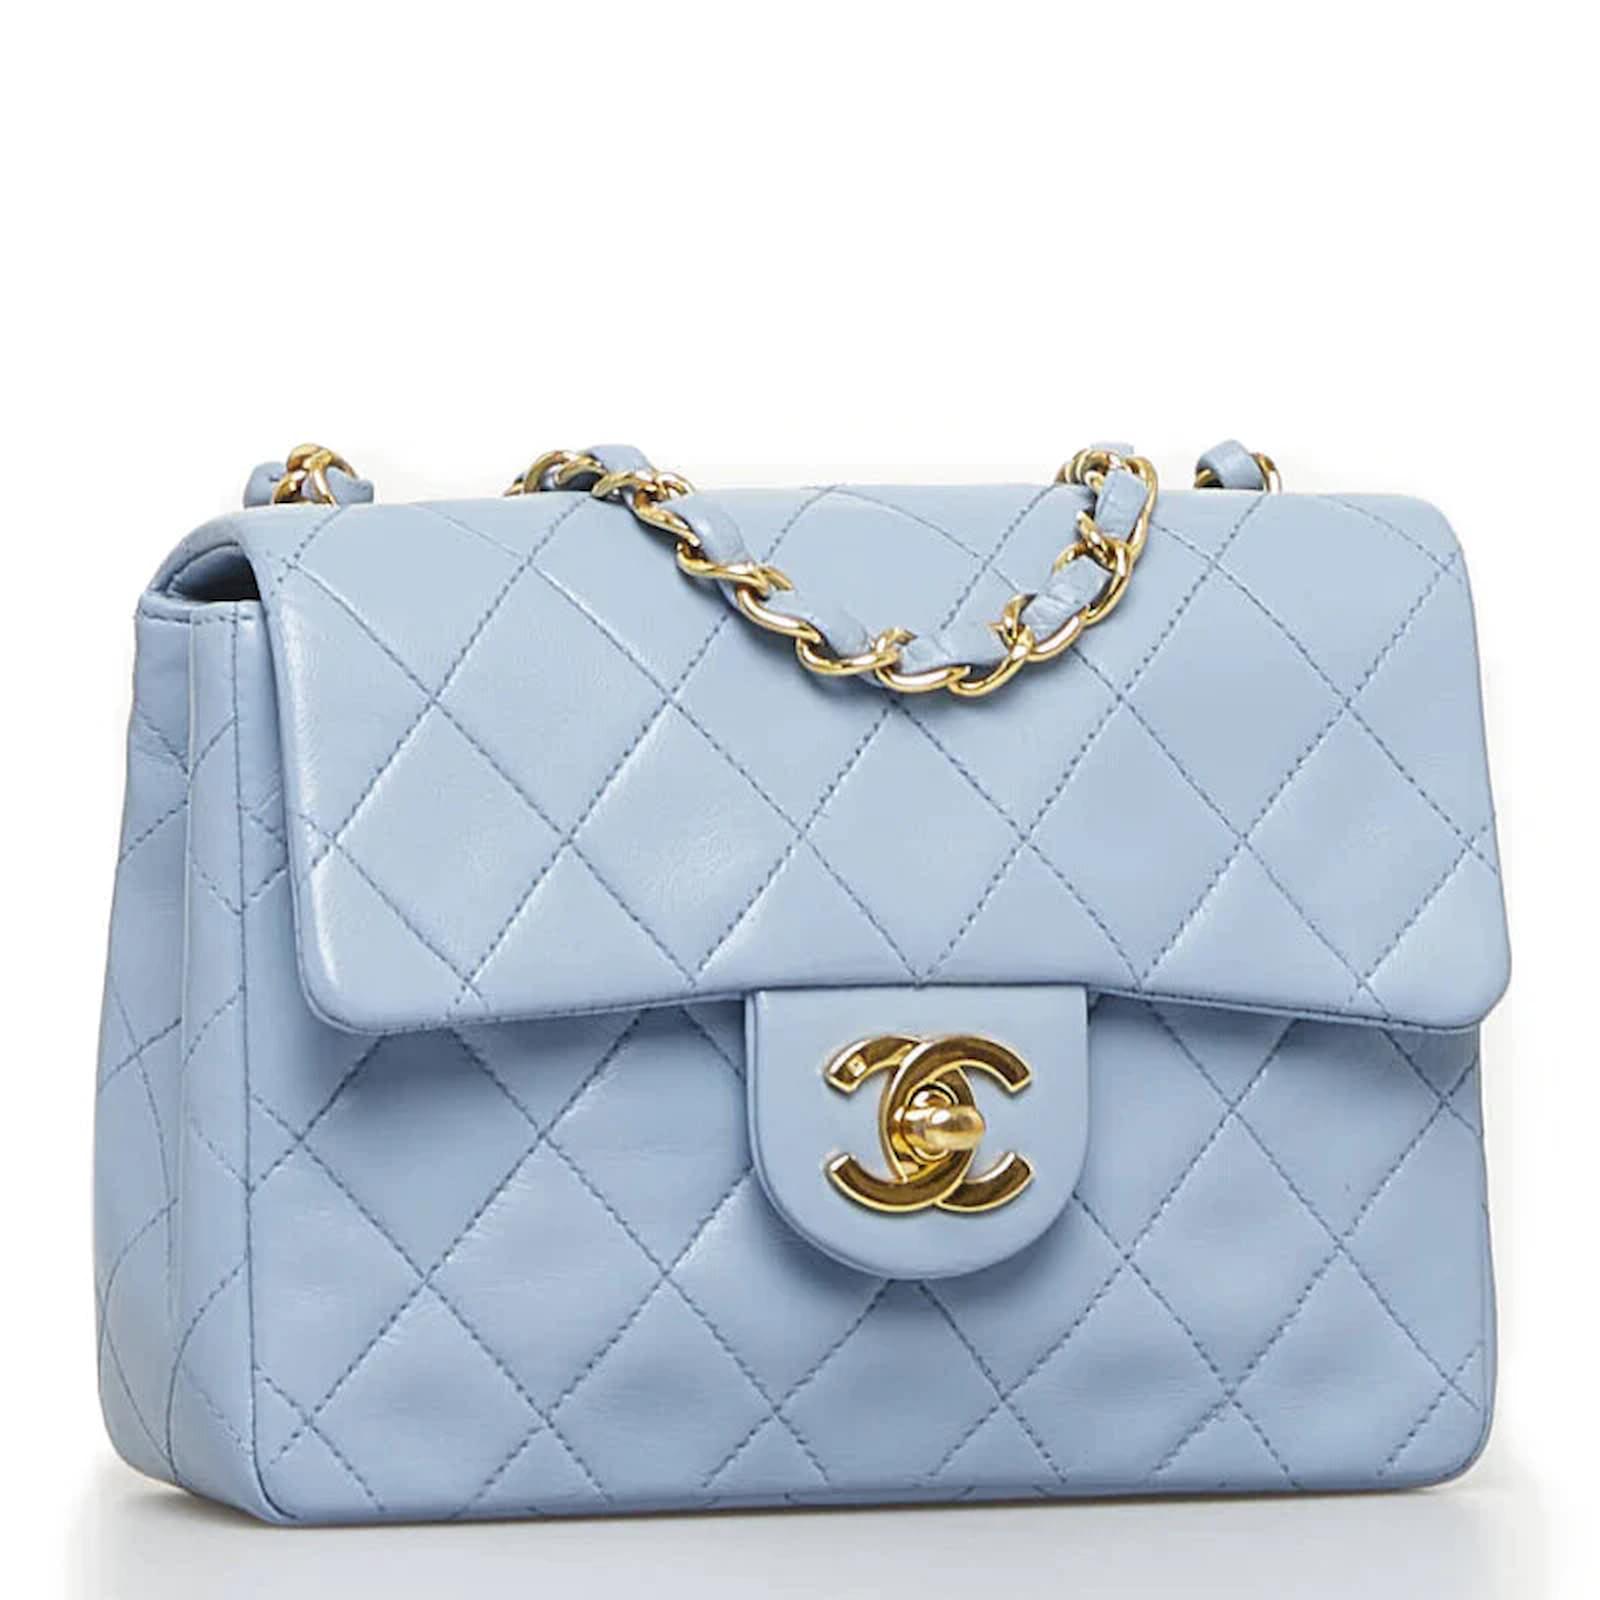 Chanel Mini Square Classic Single Flap Bag Blue Leather Pony-style